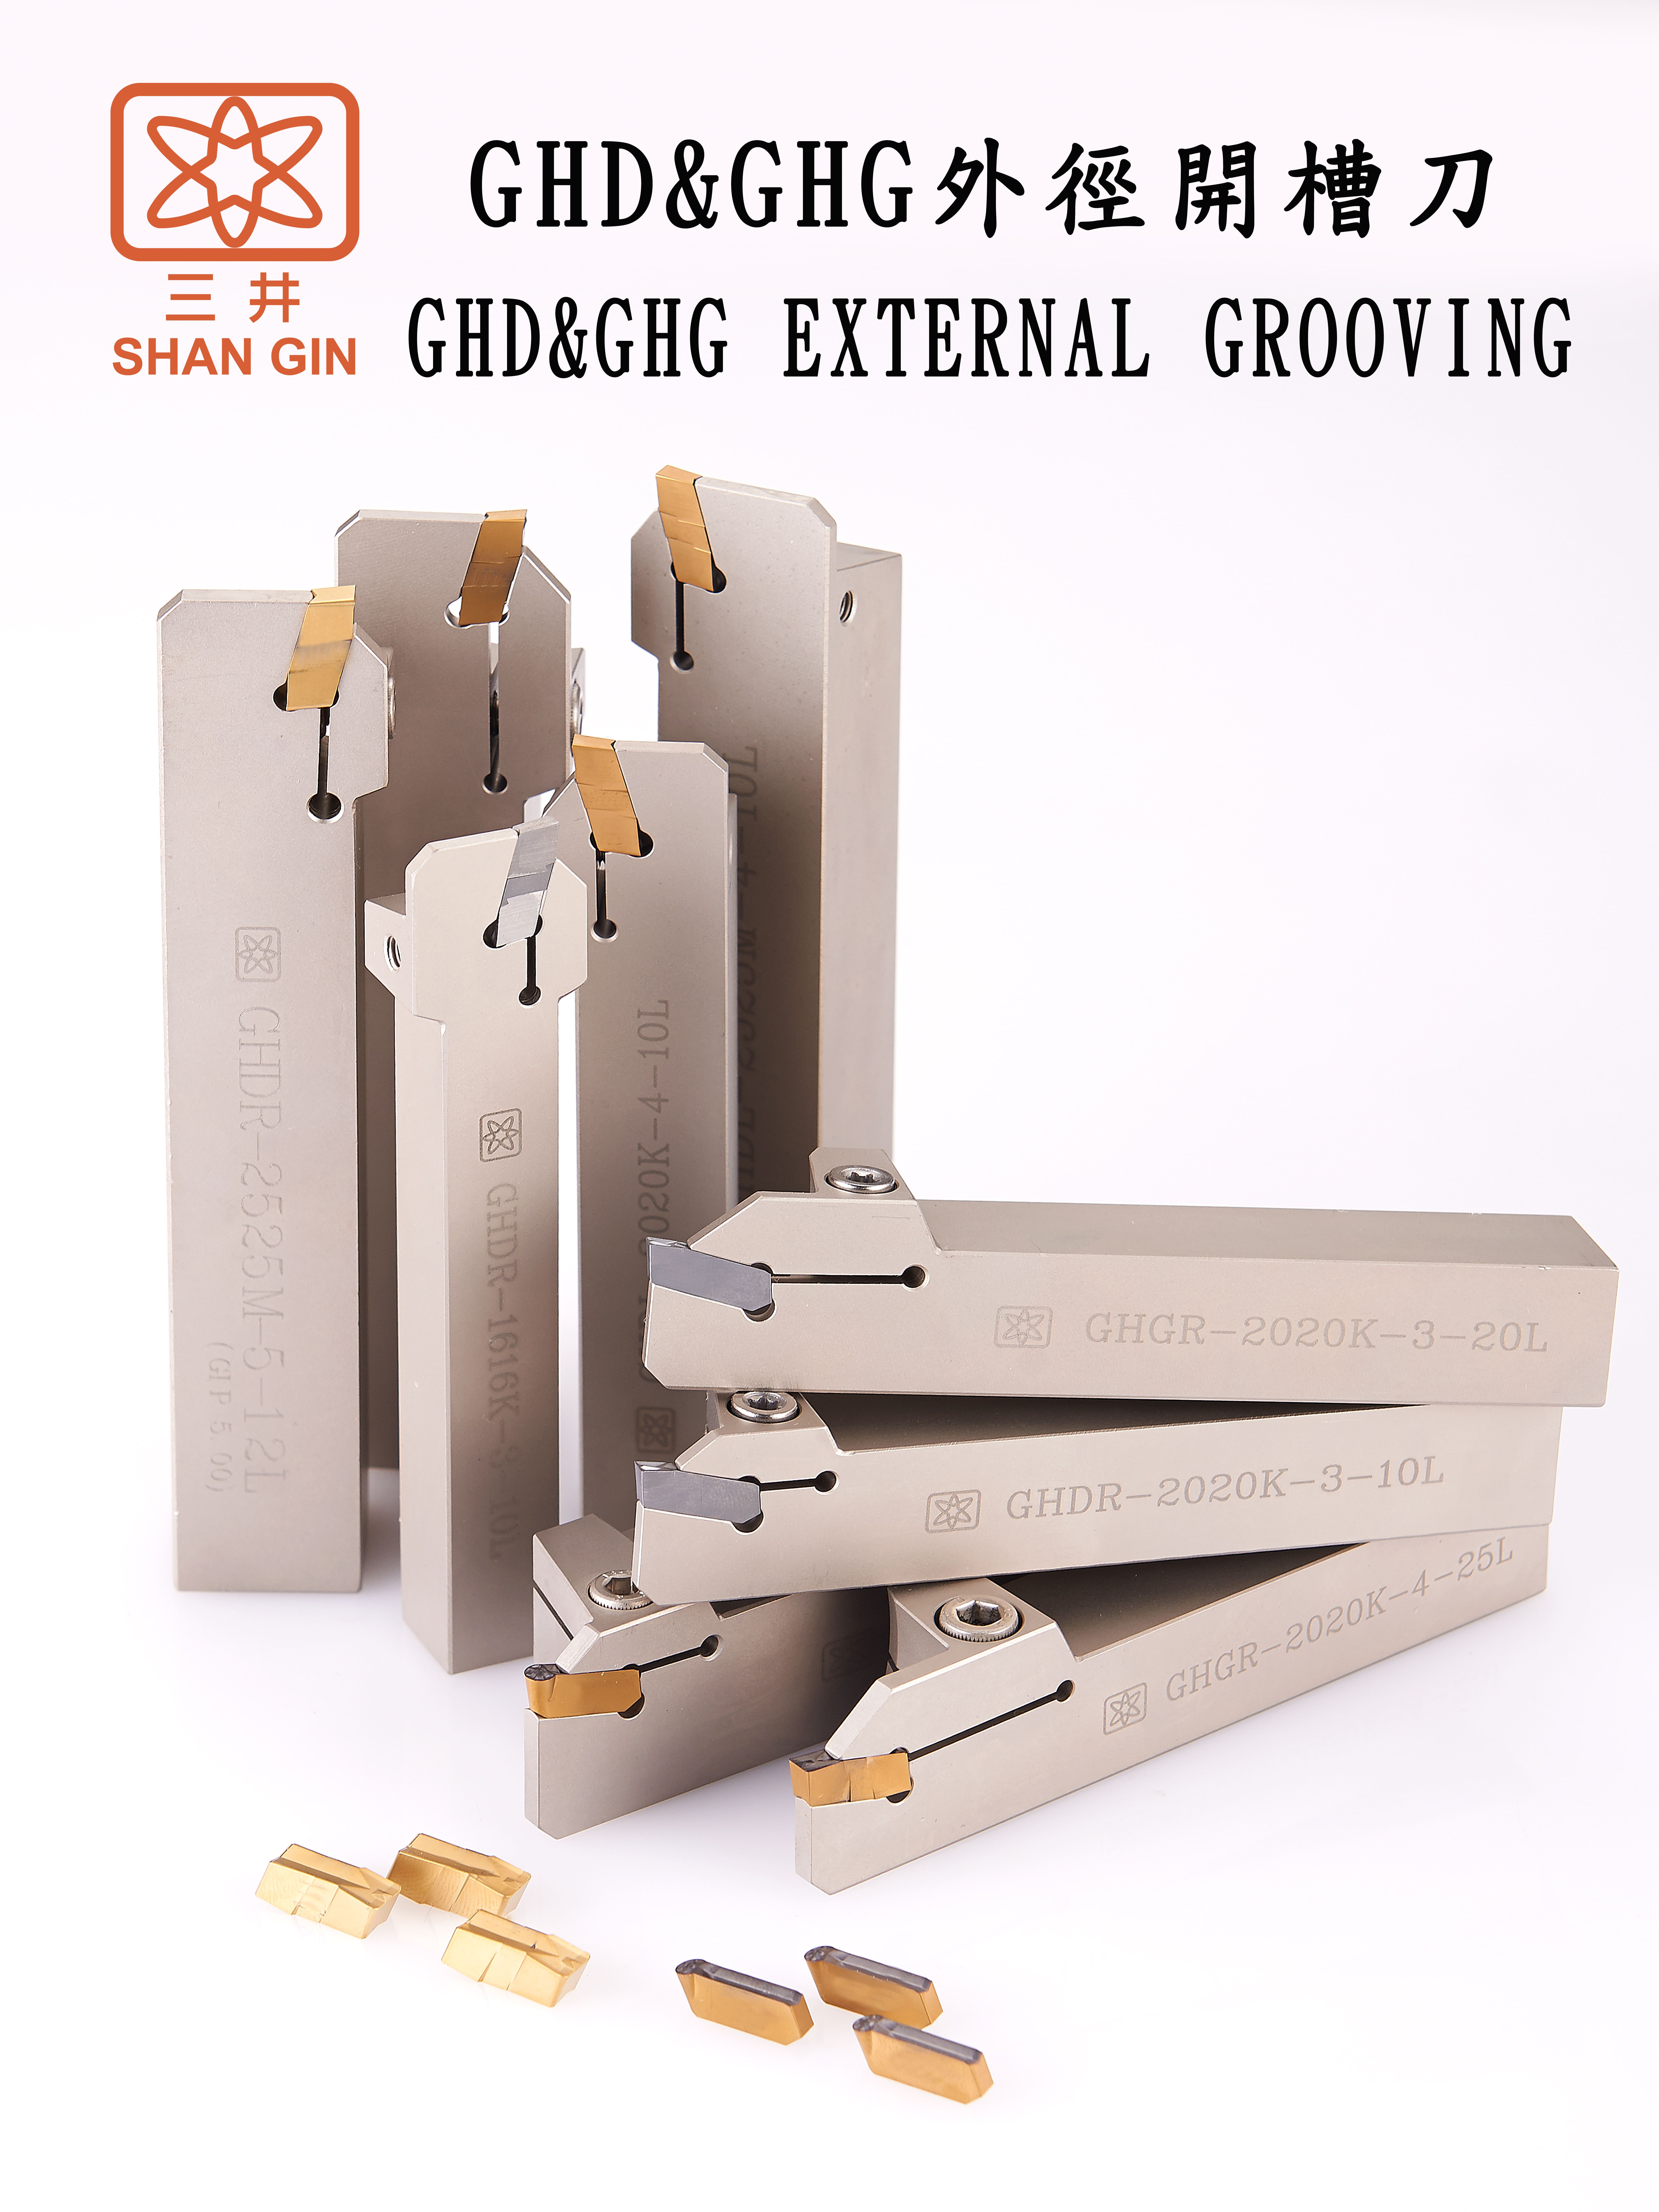 Catalog|GHD&GHG EXTERNAL GROOVING